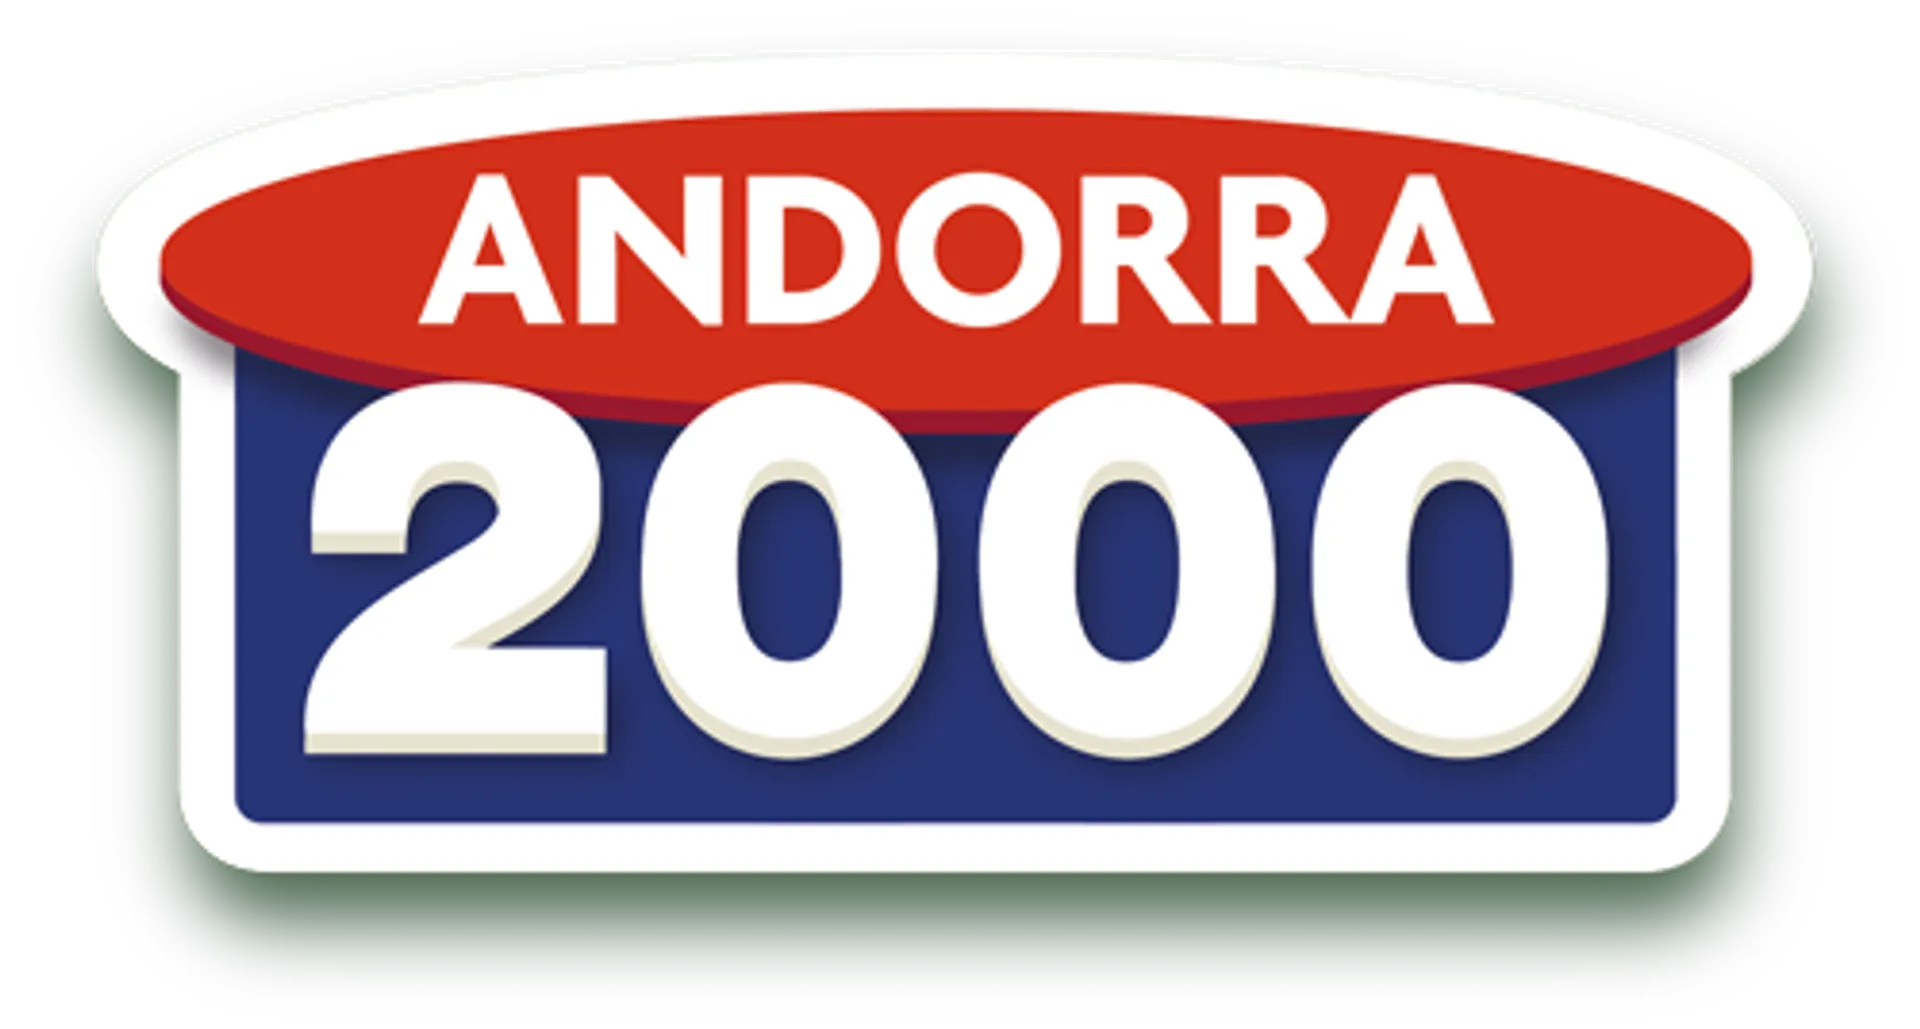 ANDORRA 2000 logo